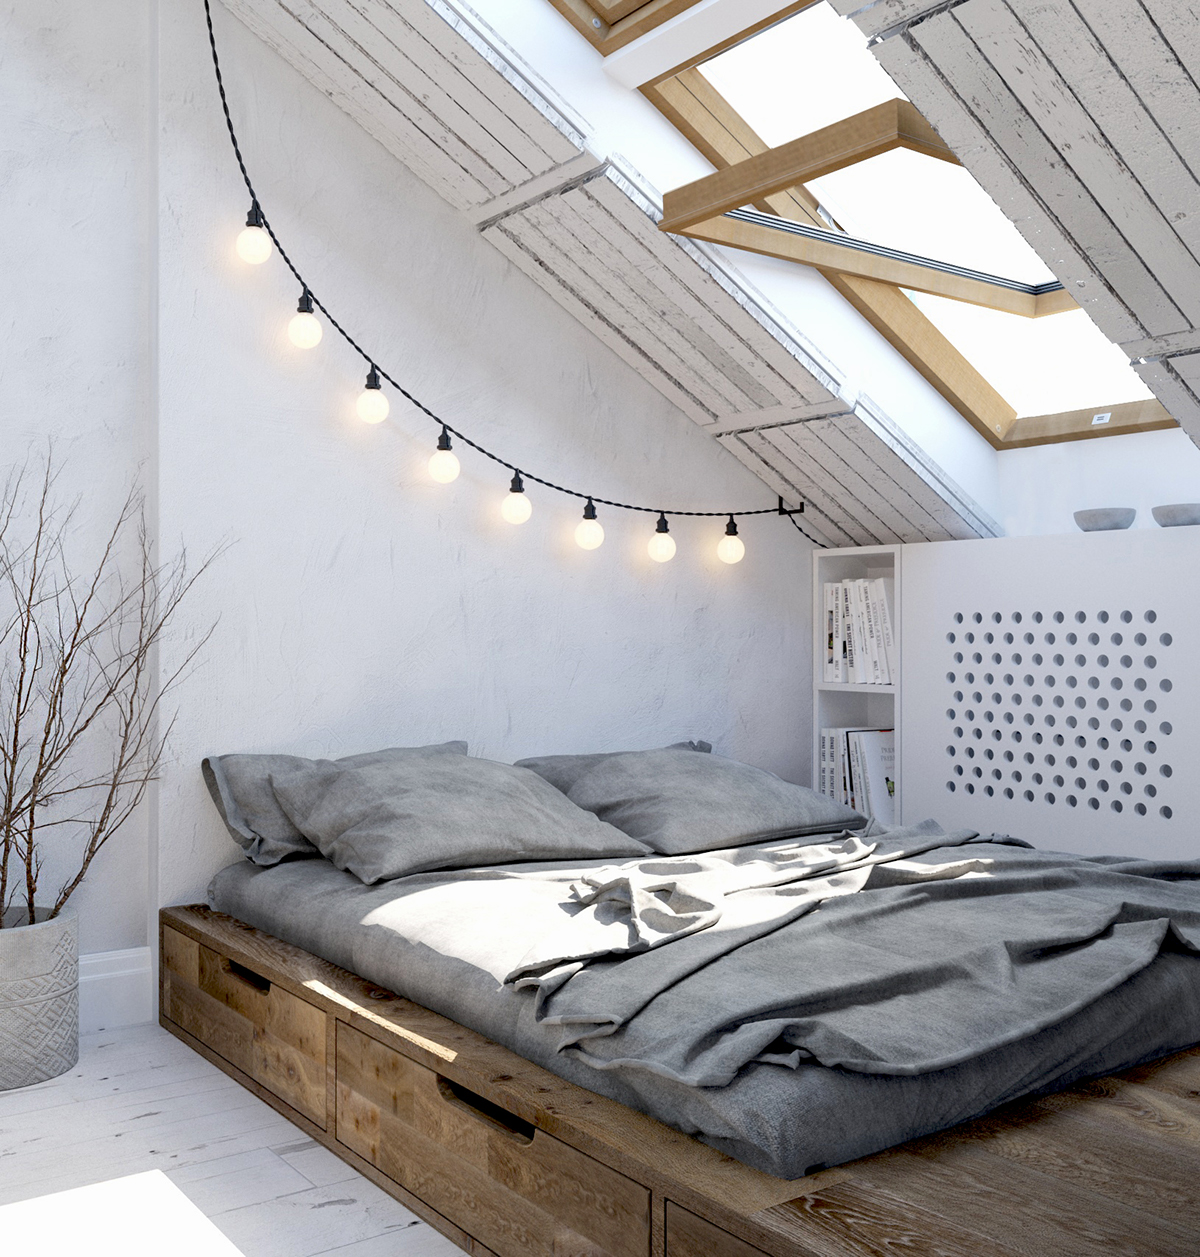 Dreamy mansard bedroom in grey shades